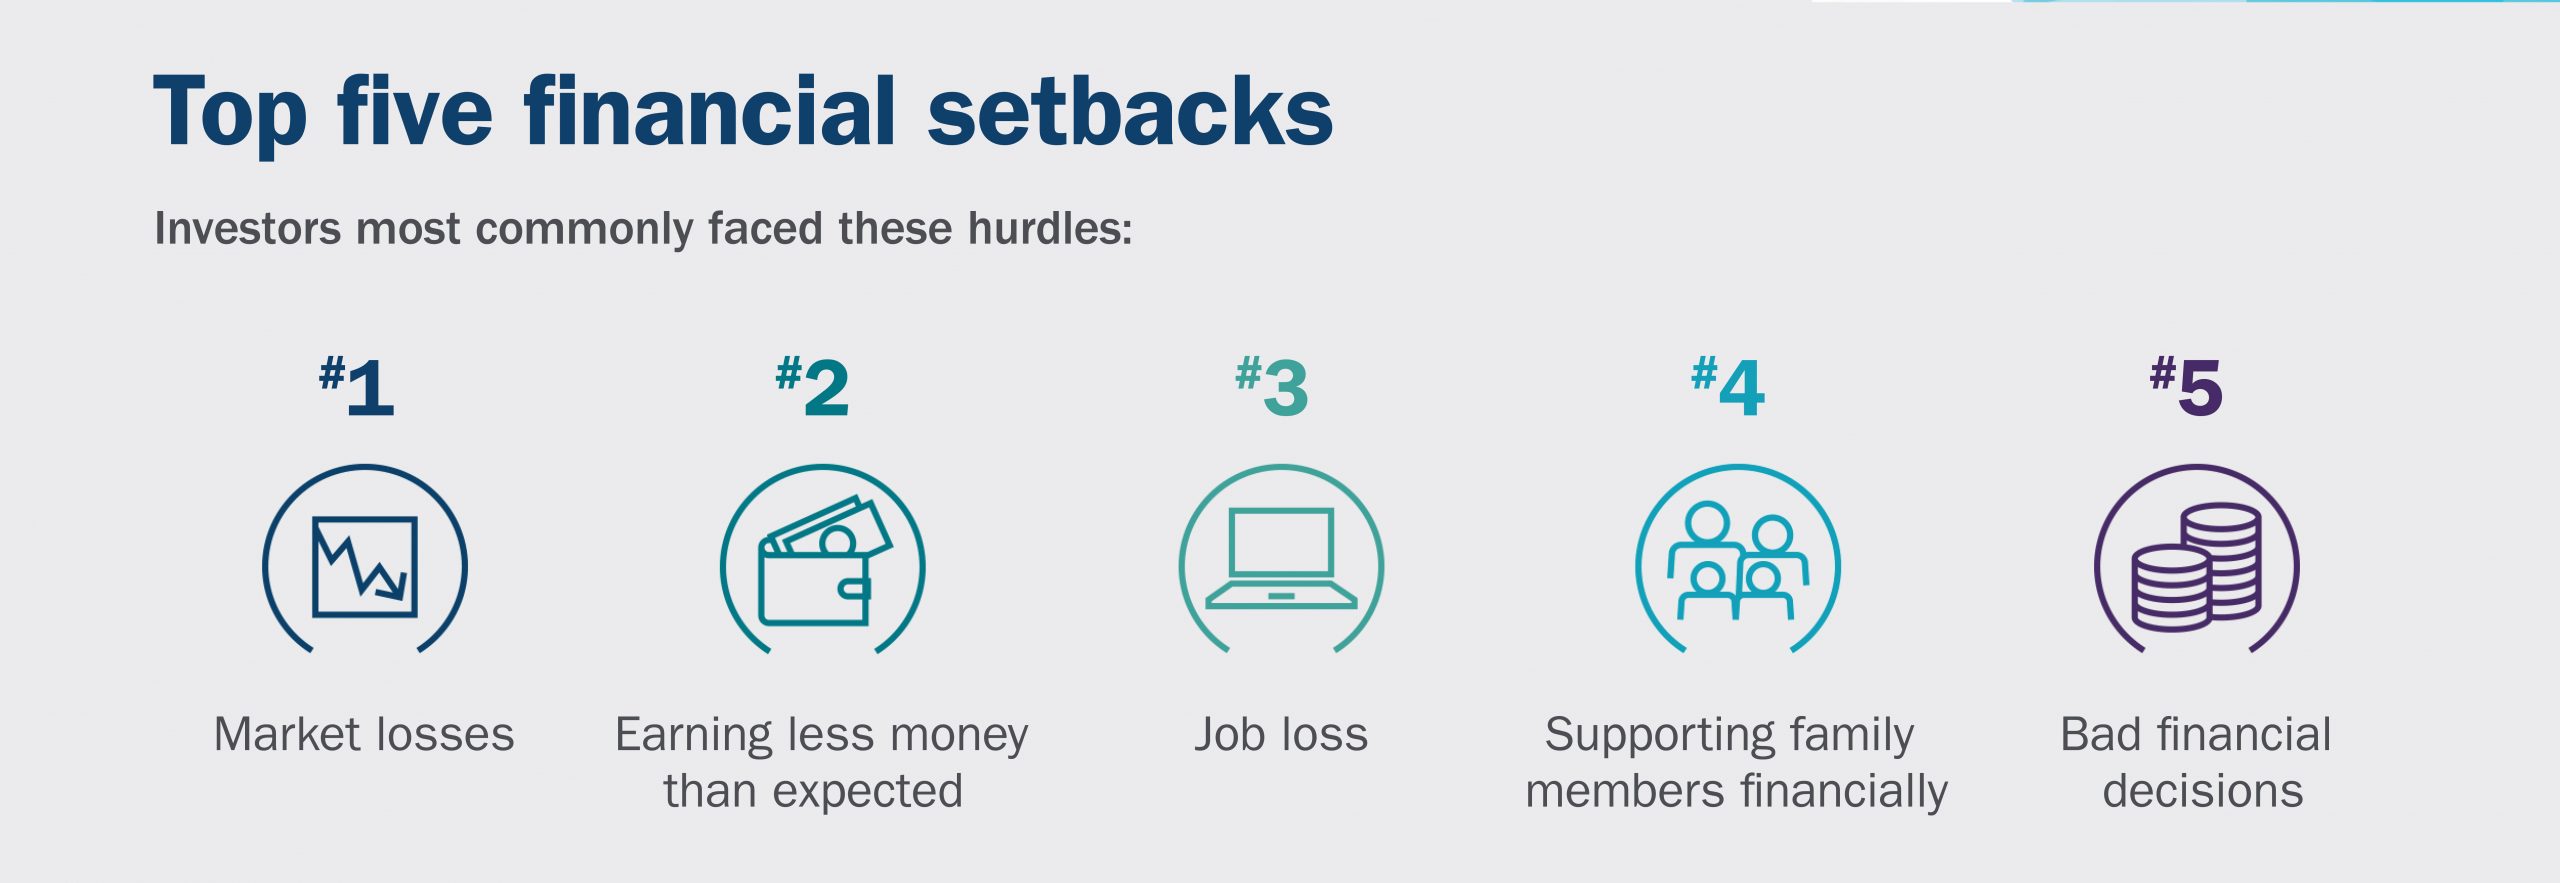 Financial setbacks: top five